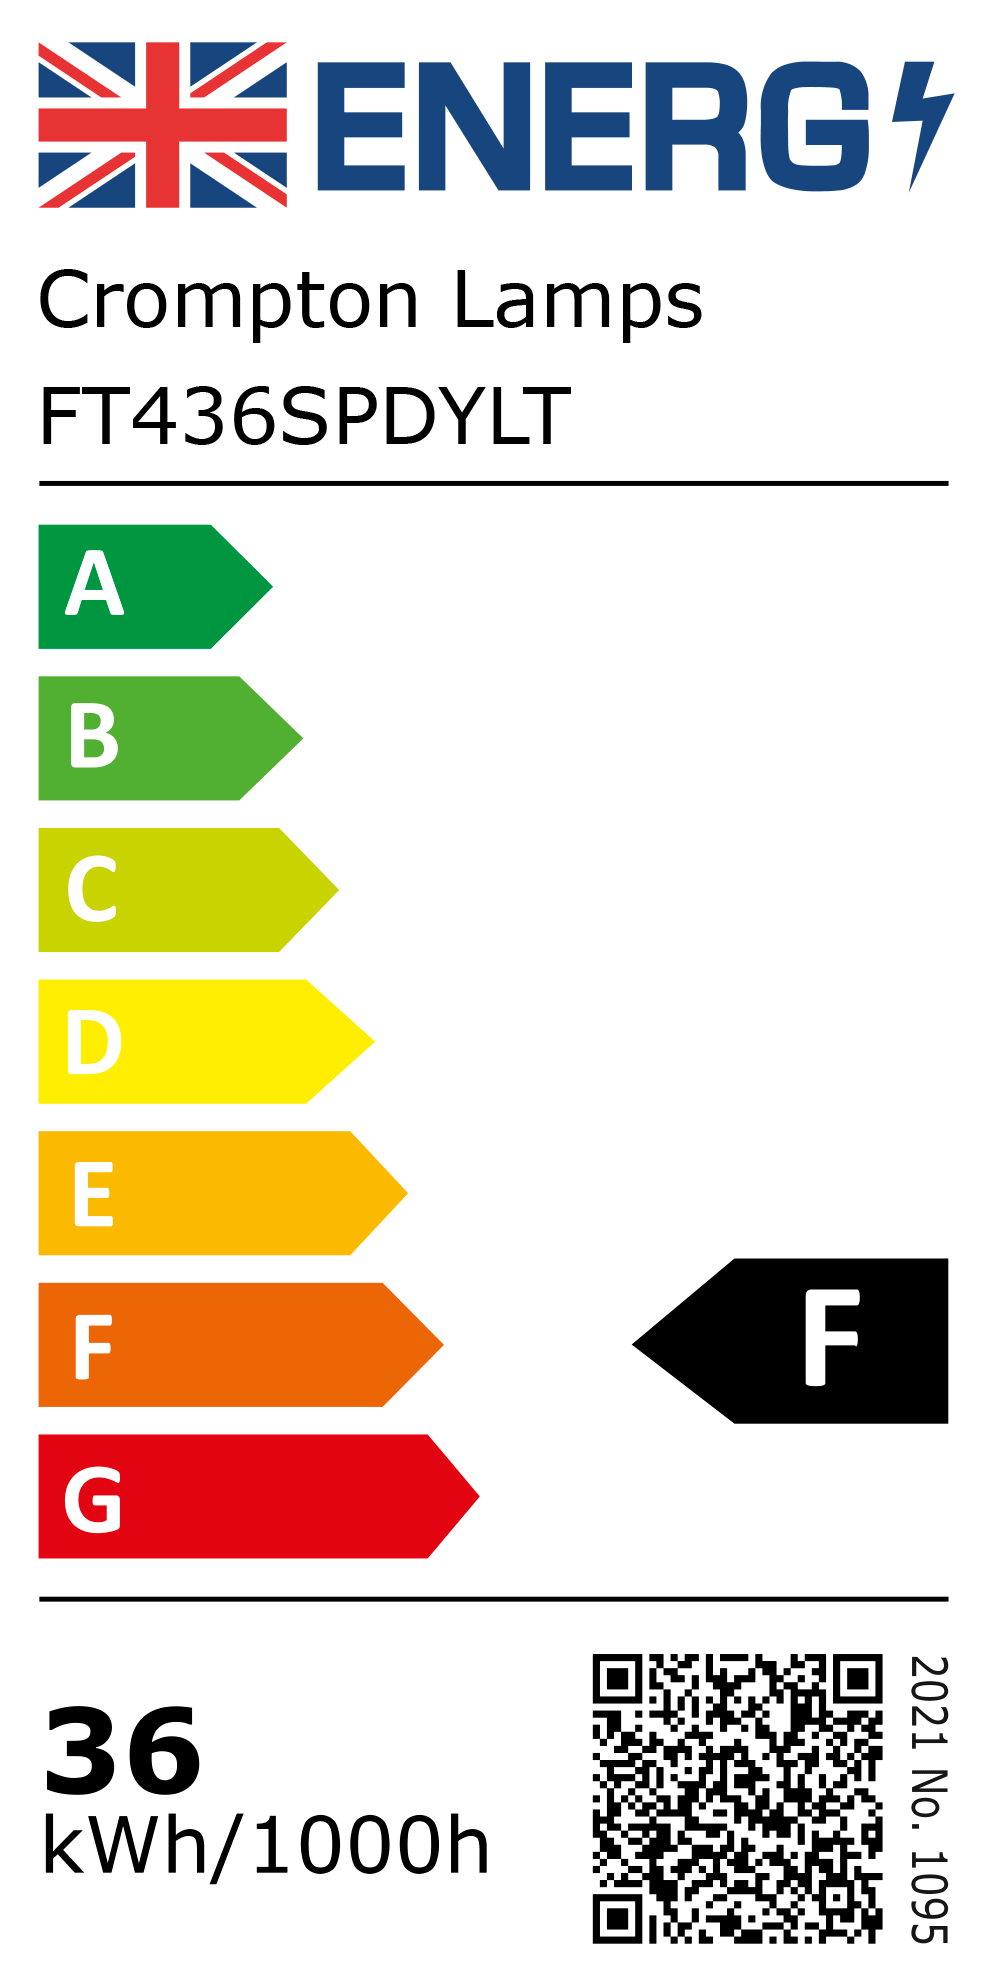 New 2021 Energy Rating Label: Stock Code FT436SPDYLT